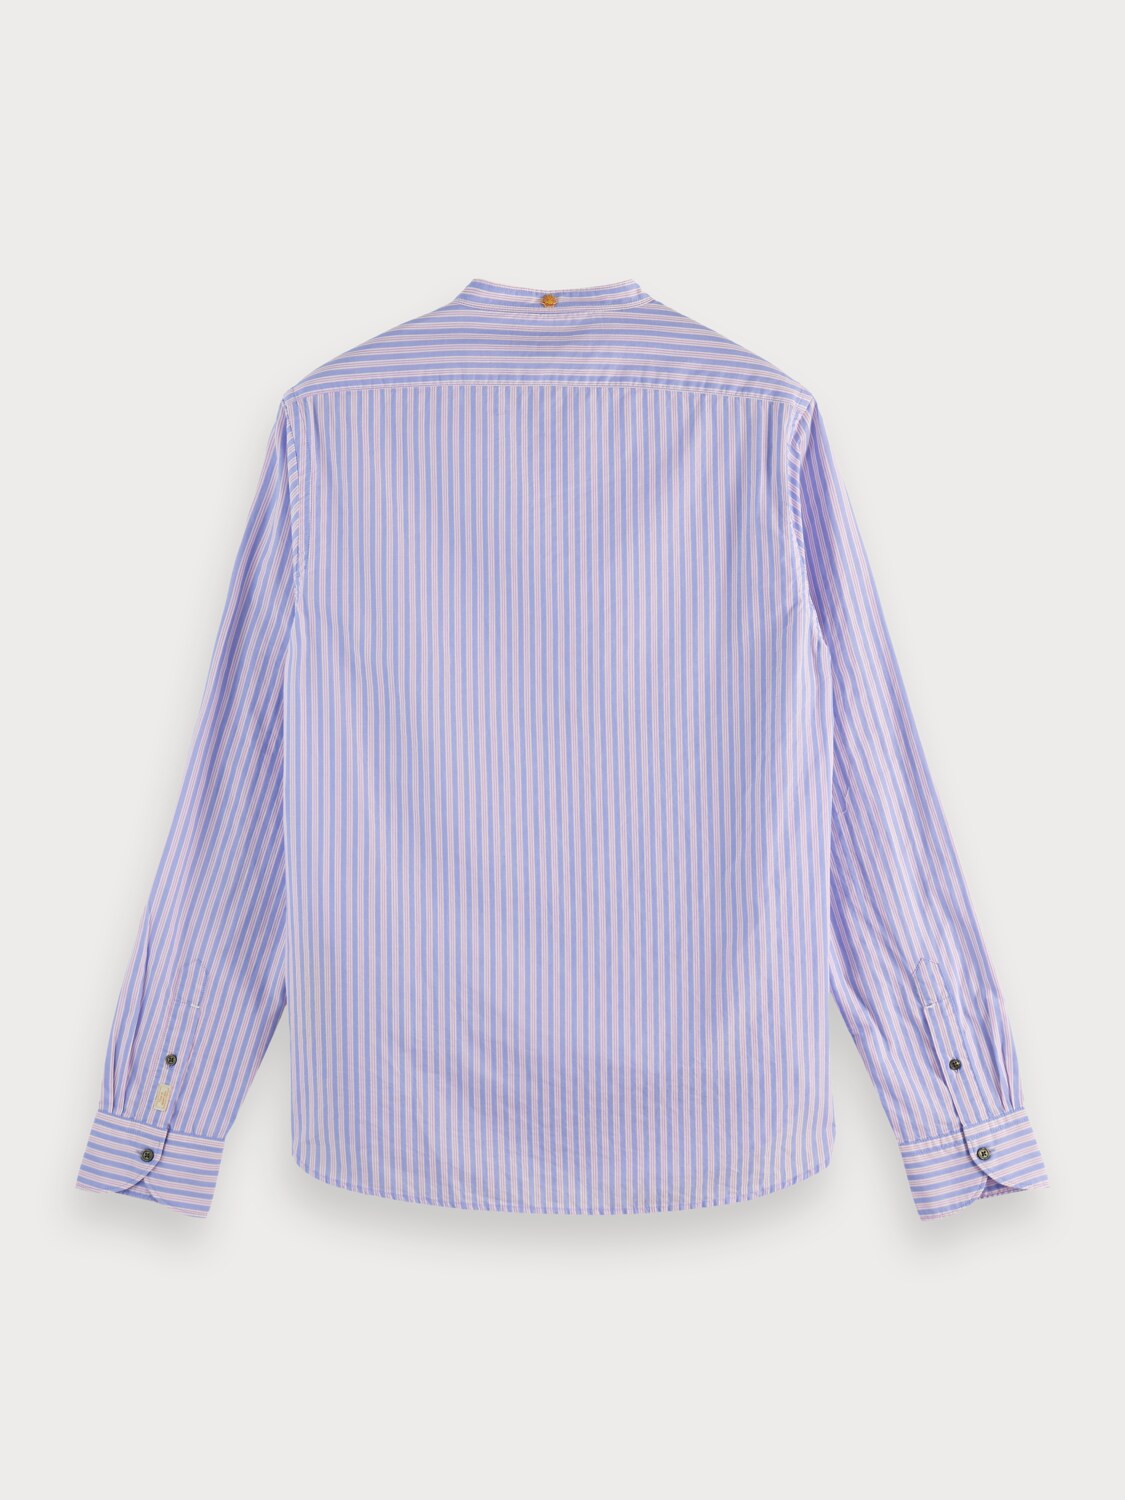 RELAXED FIT- Lightweight striped shirt